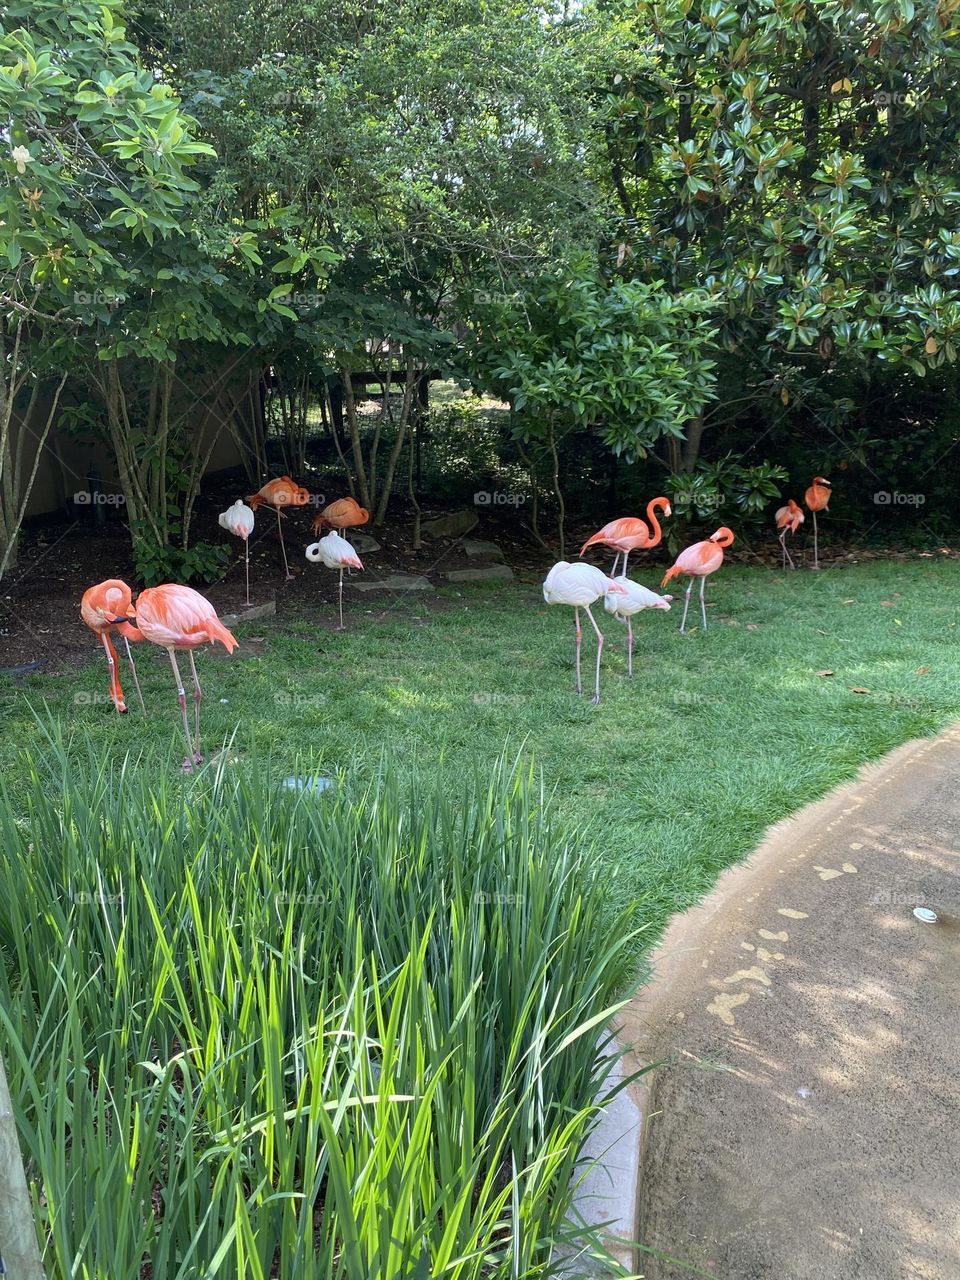 Flamingos at the Nashville zoo